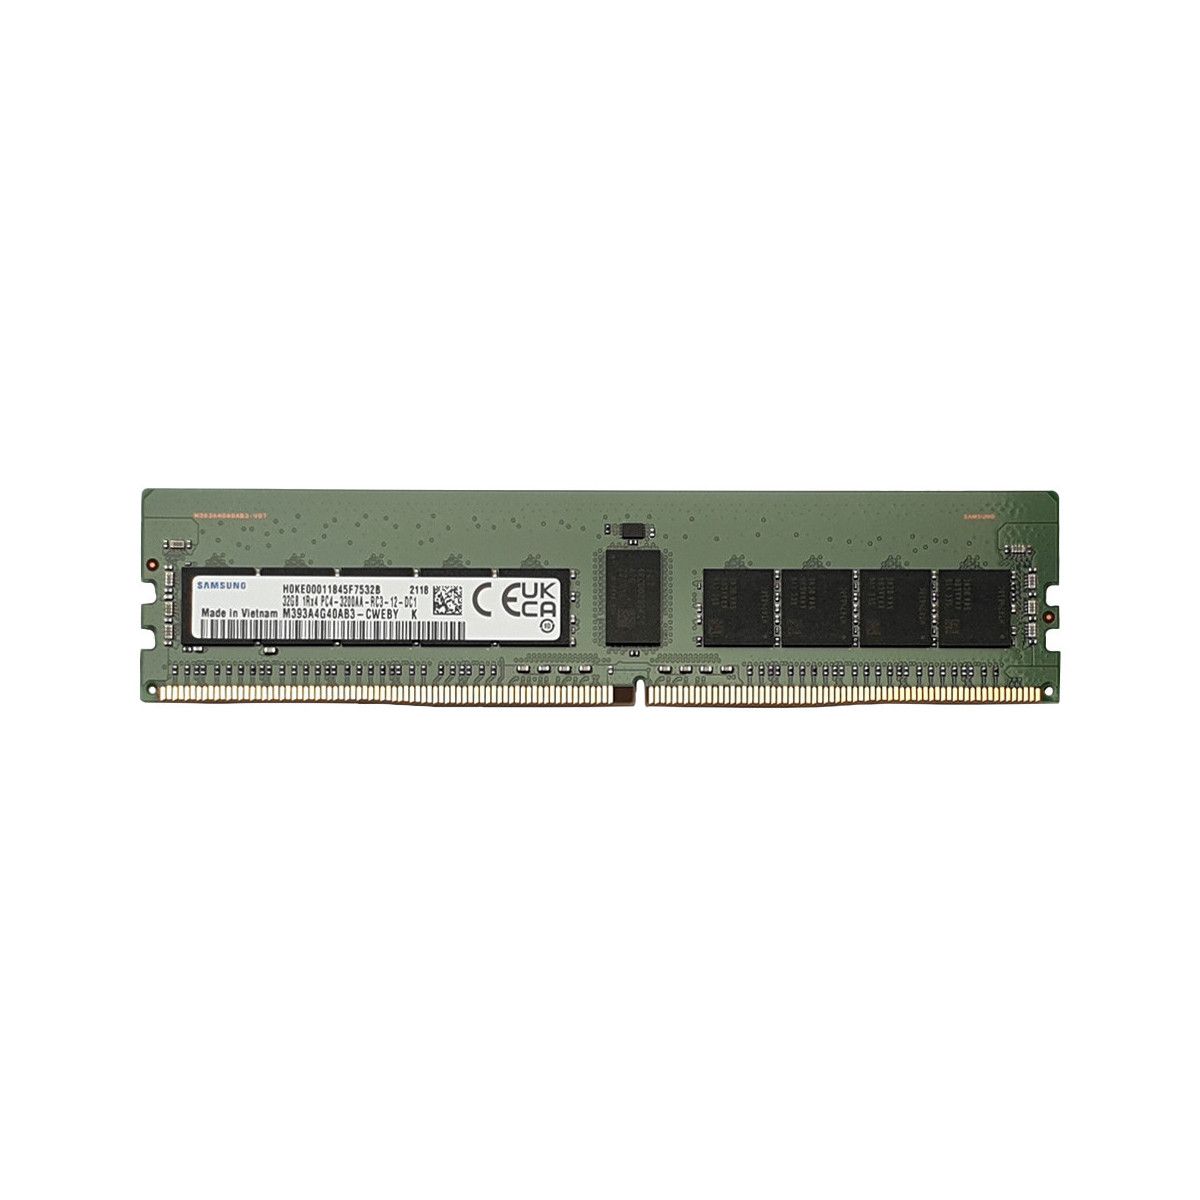 UCS-MR-X32G1RW-MS - Memstar 1x 32GB DDR4-3200 RDIMM PC4-25600R - Memorie OEM compatibilă Mem-Star 1 - Memstar 